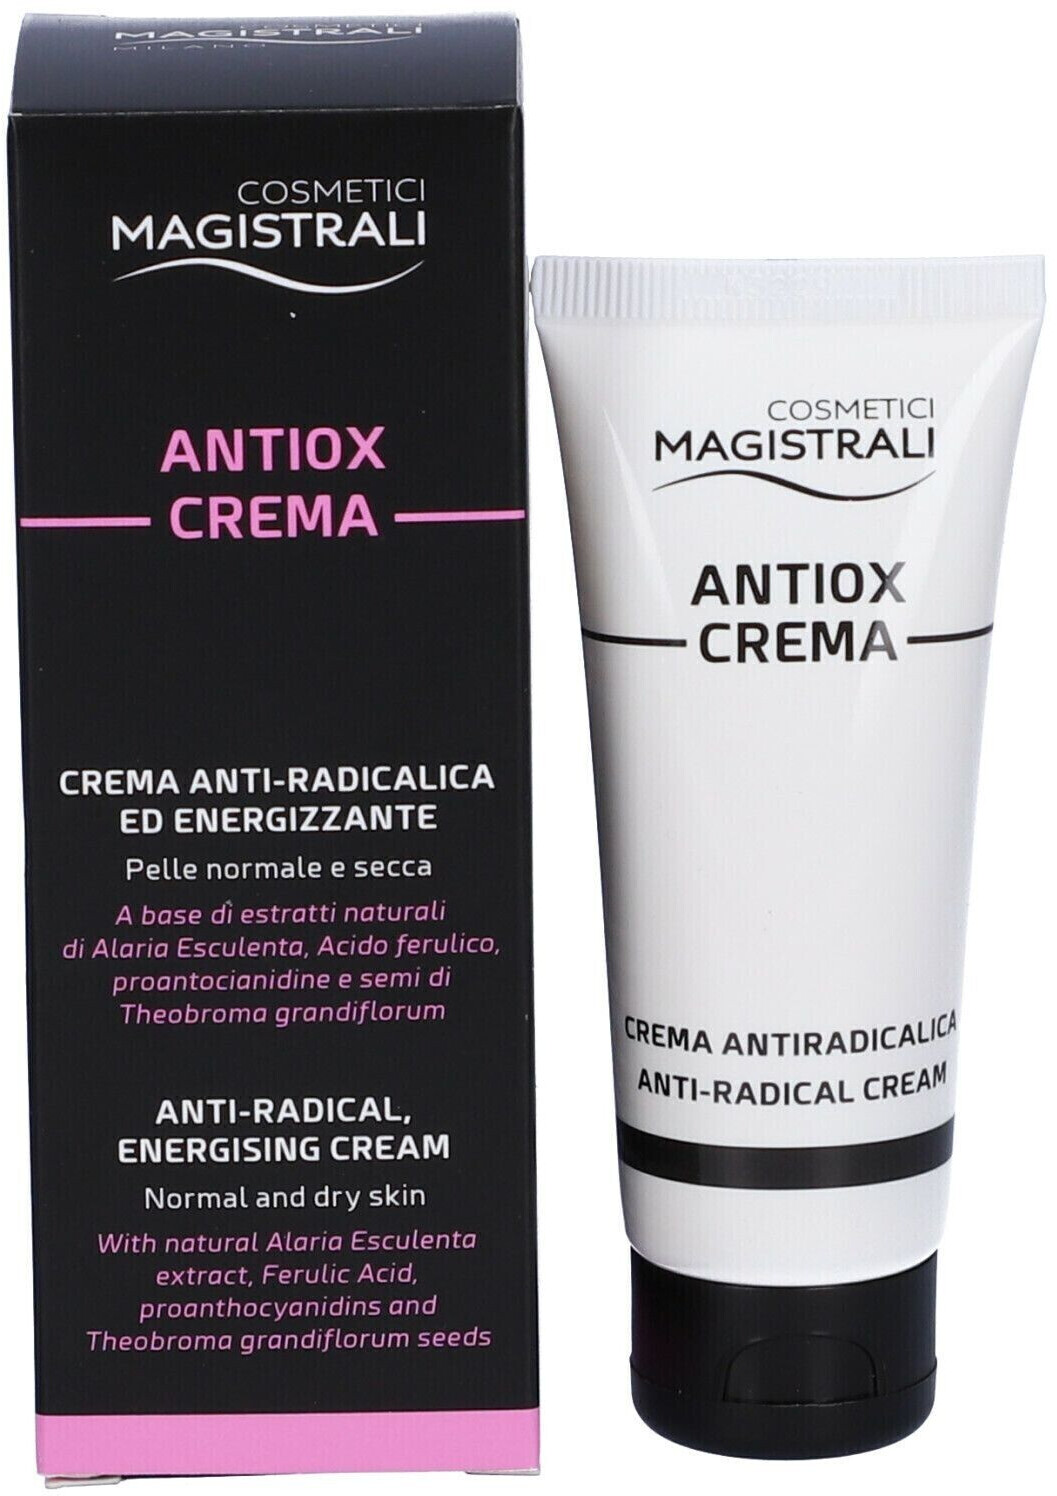 Cosmetici Magistrali Antiox Crema (40ml) a € 24,49 (oggi)